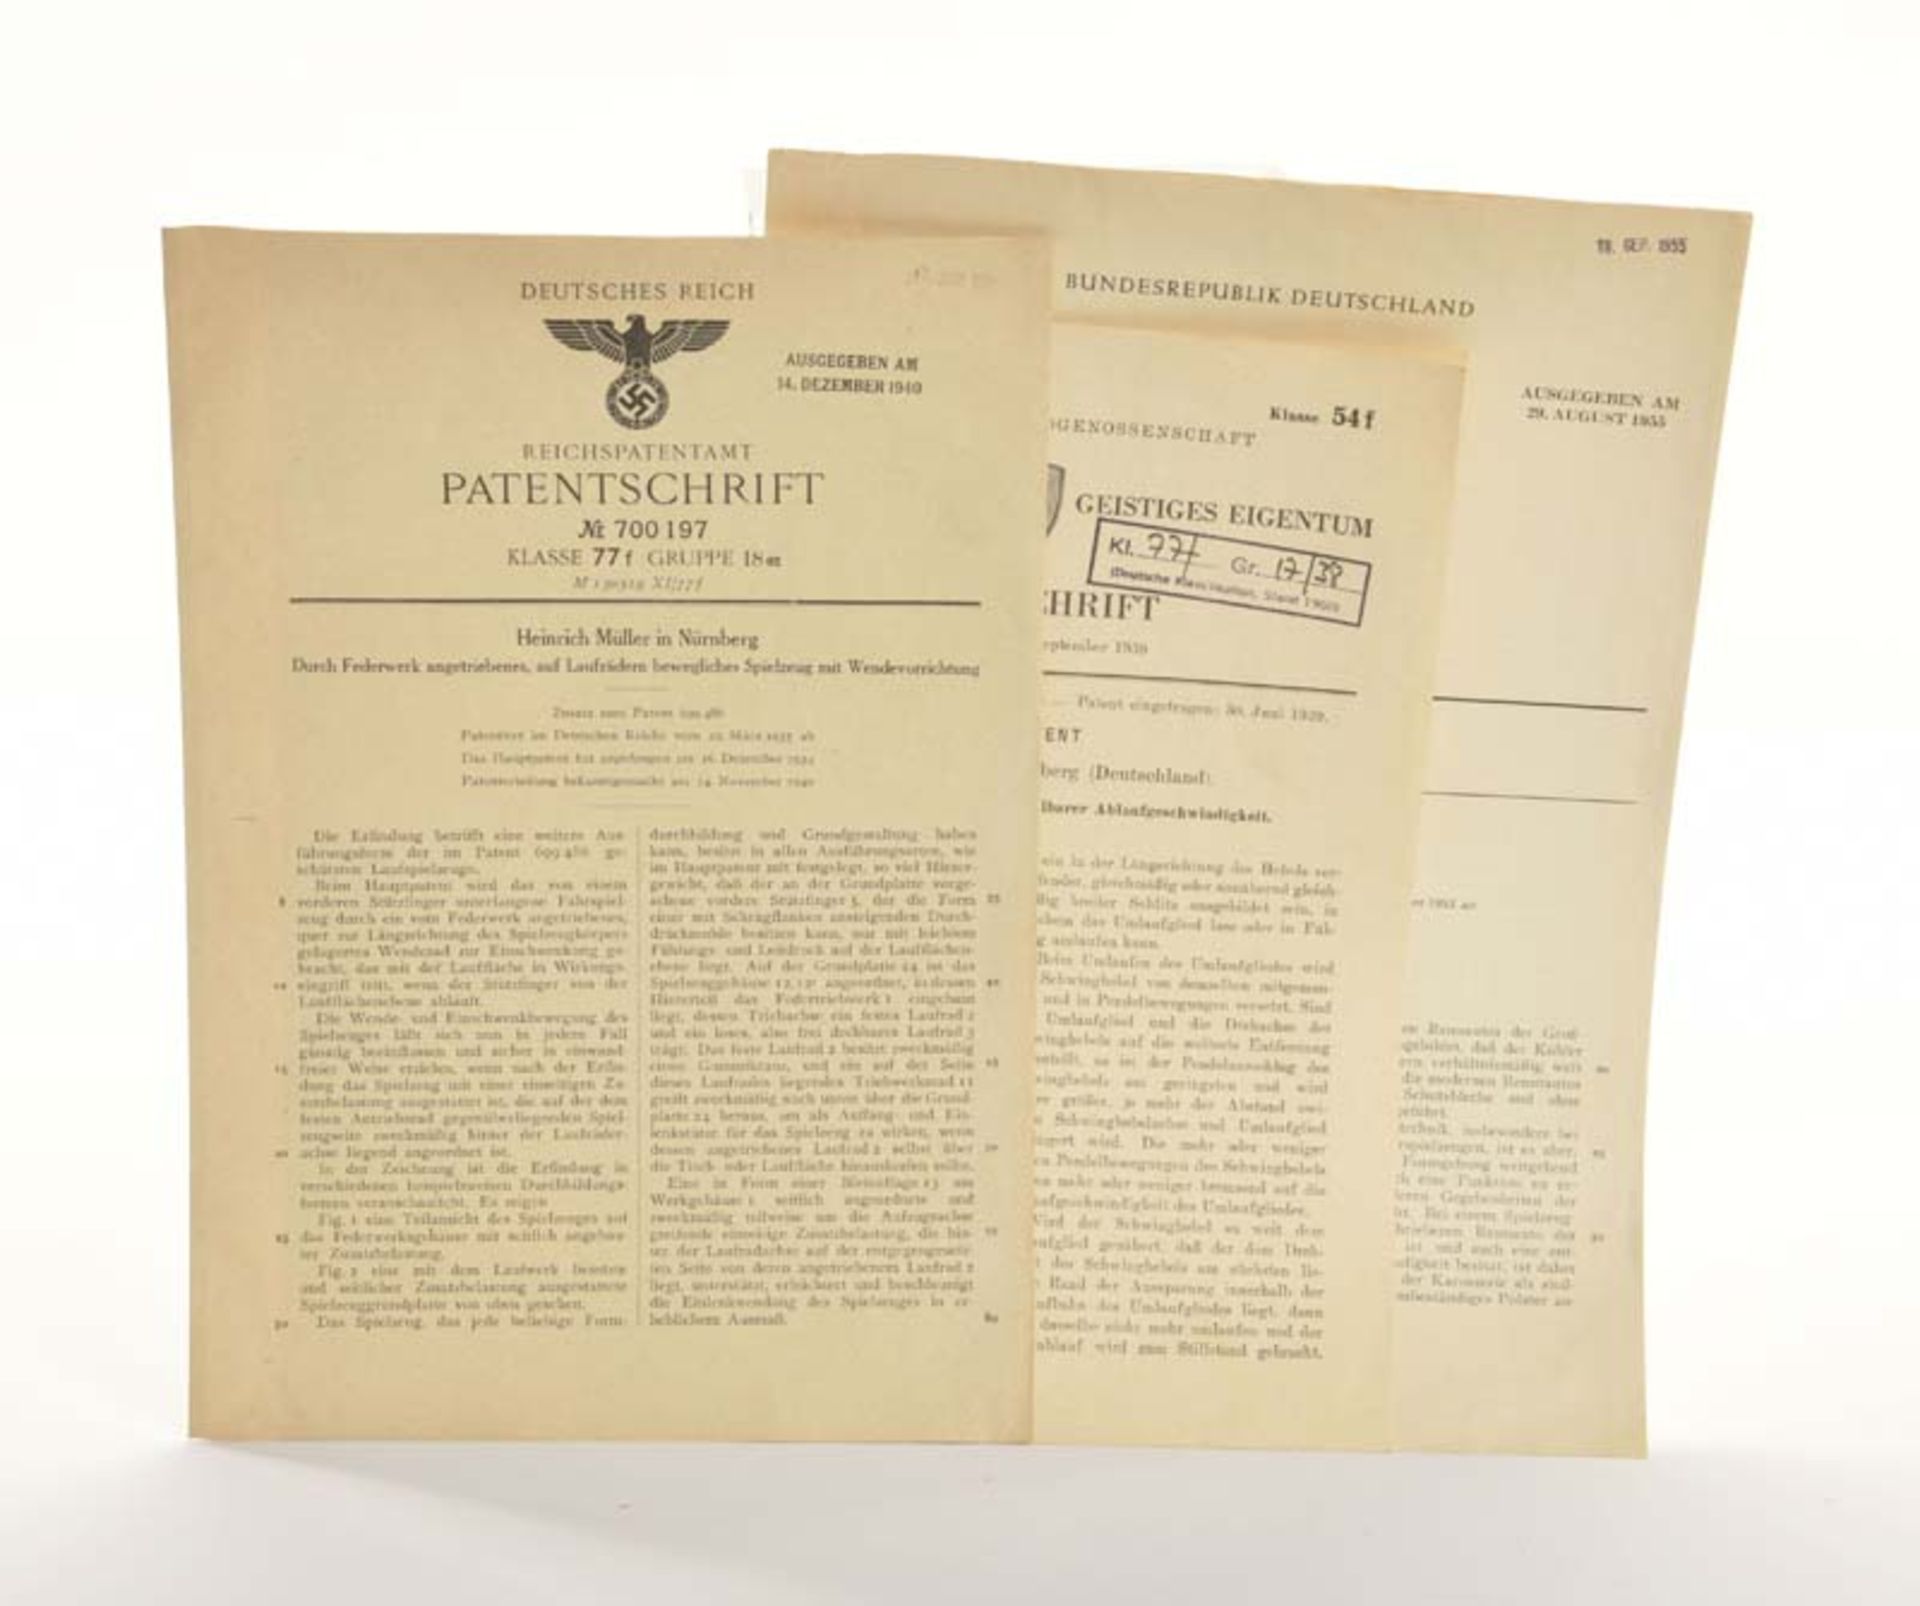 3 Patent Certificates, Schuco "Heinrich Müller - Nürnberg", documents for mechanical tin toys